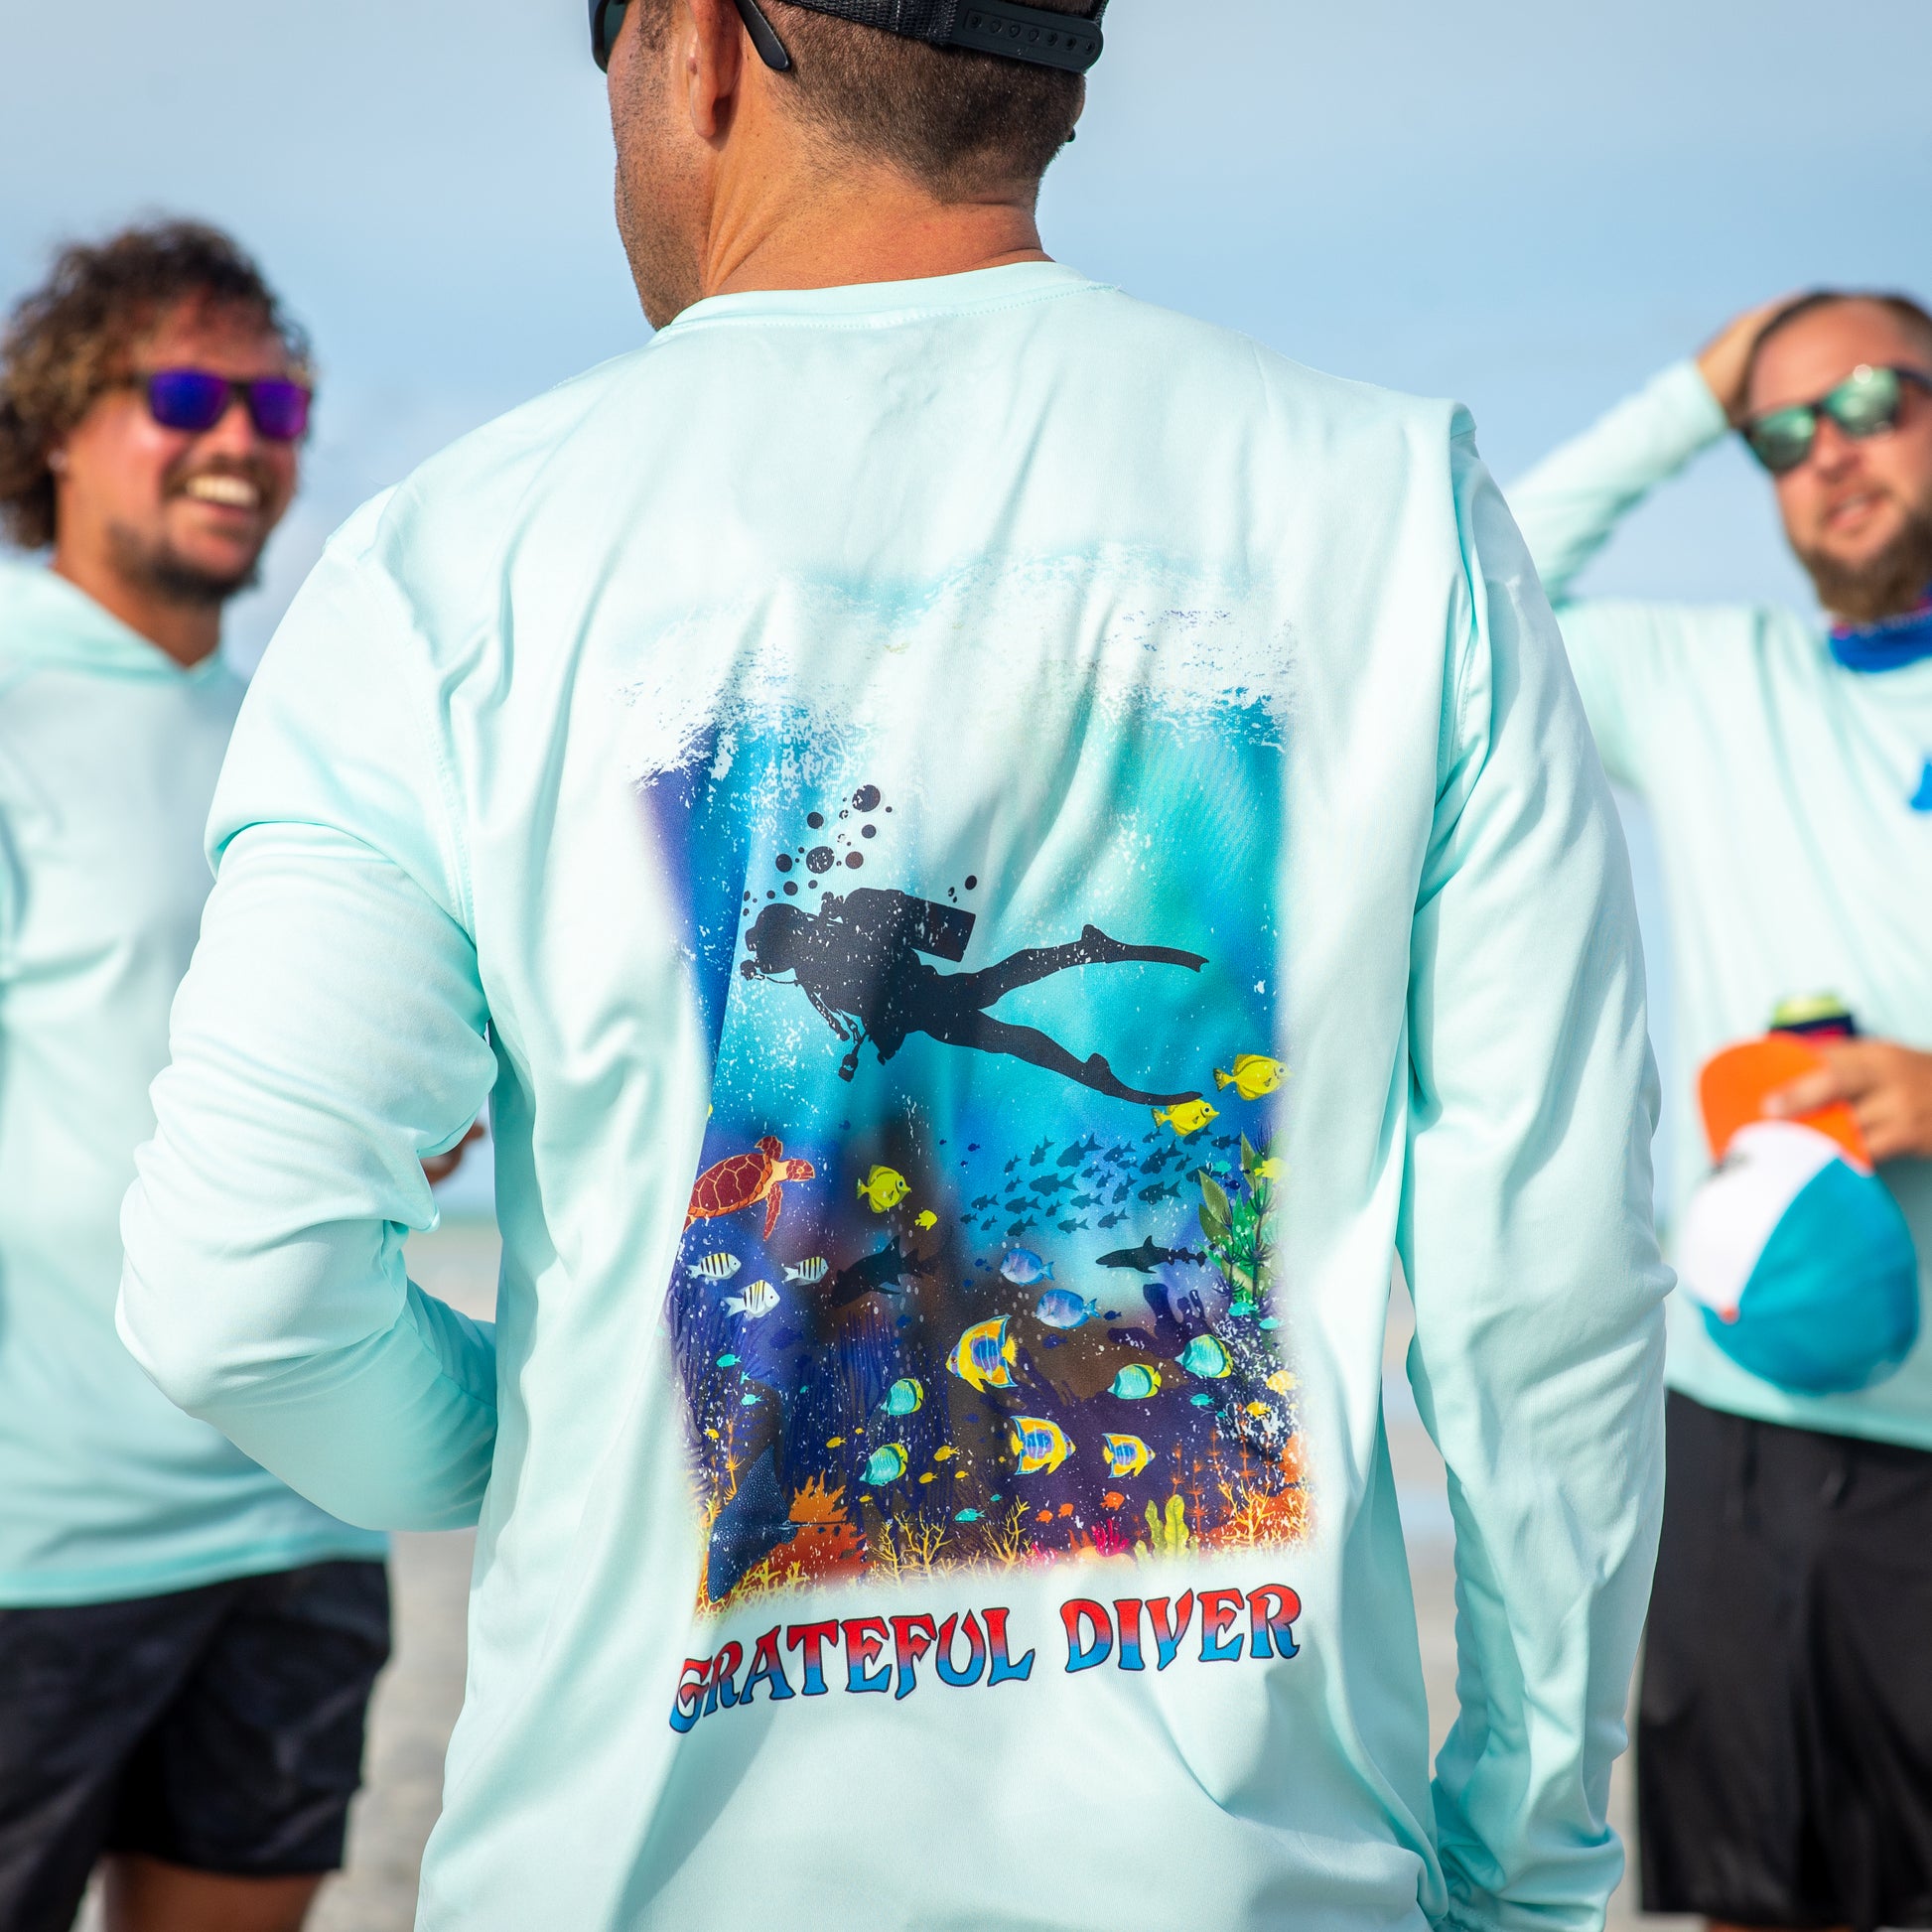 Grateful Diver Reef Diver UV Shirt | Grateful Diver XS / White